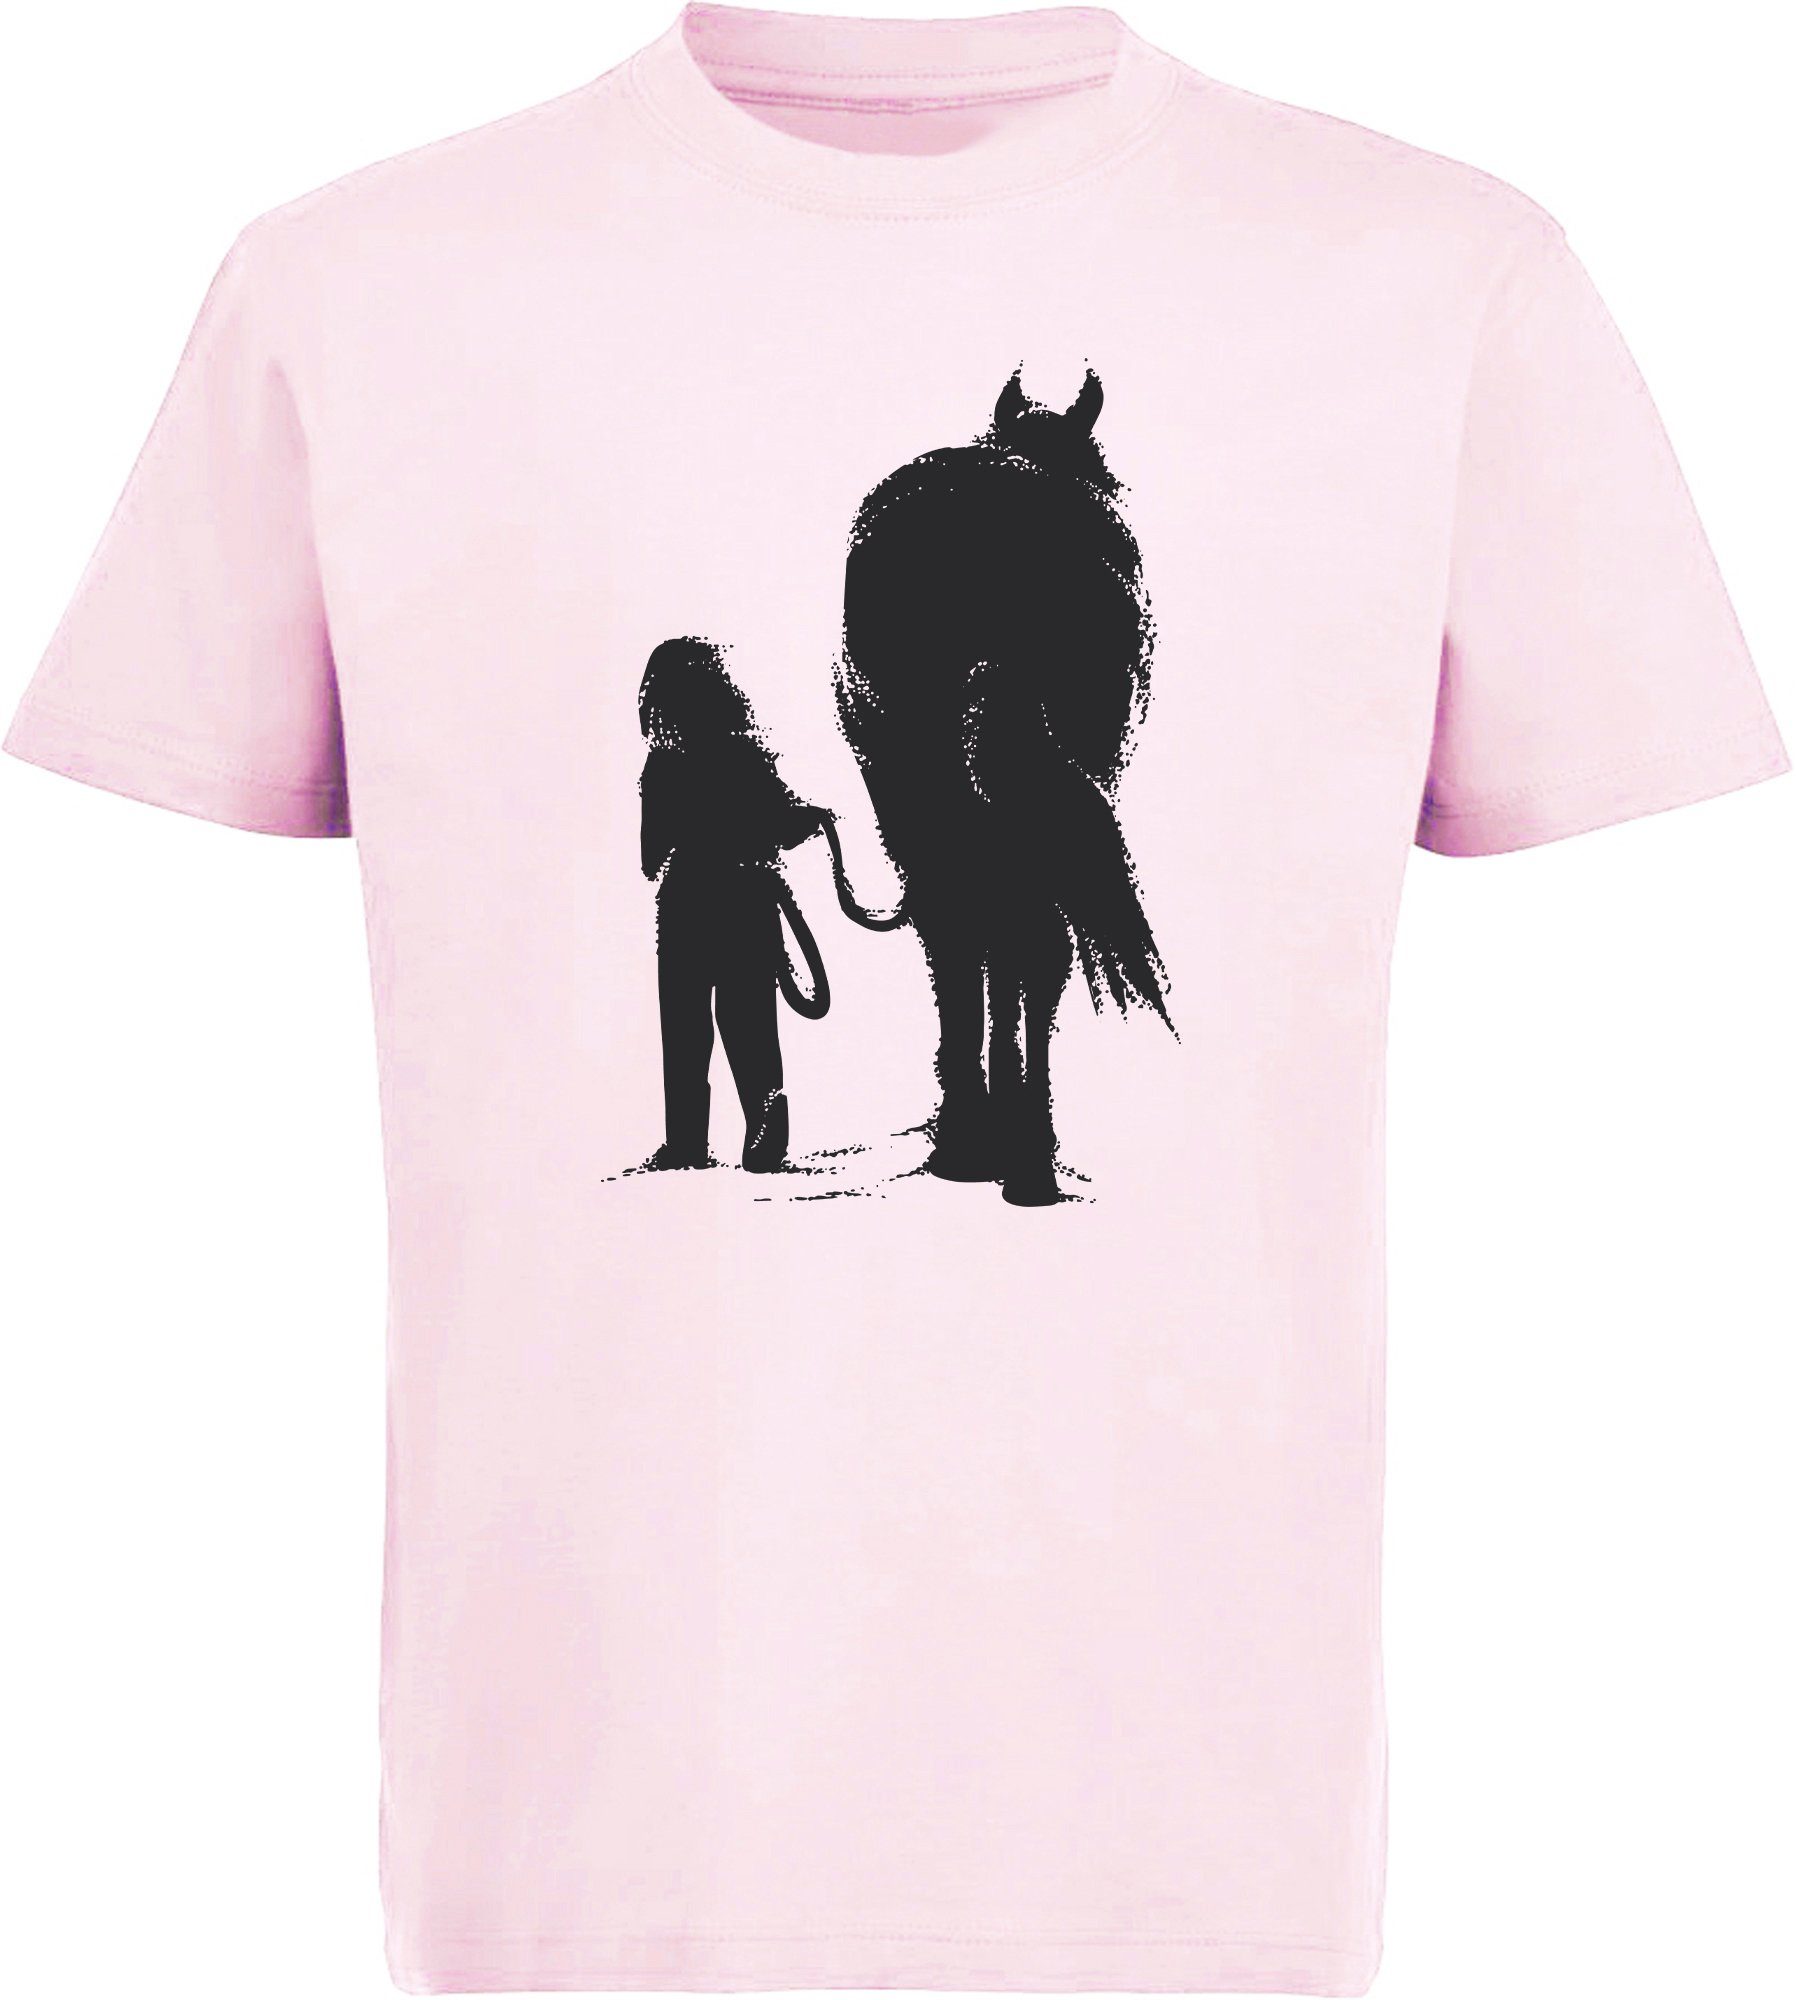 MyDesign24 T-Shirt Kinder Print Shirt bedruckt - Mädchen & Pferd beim Spaziergang Baumwollshirt mit Aufdruck, i250 rosa | T-Shirts